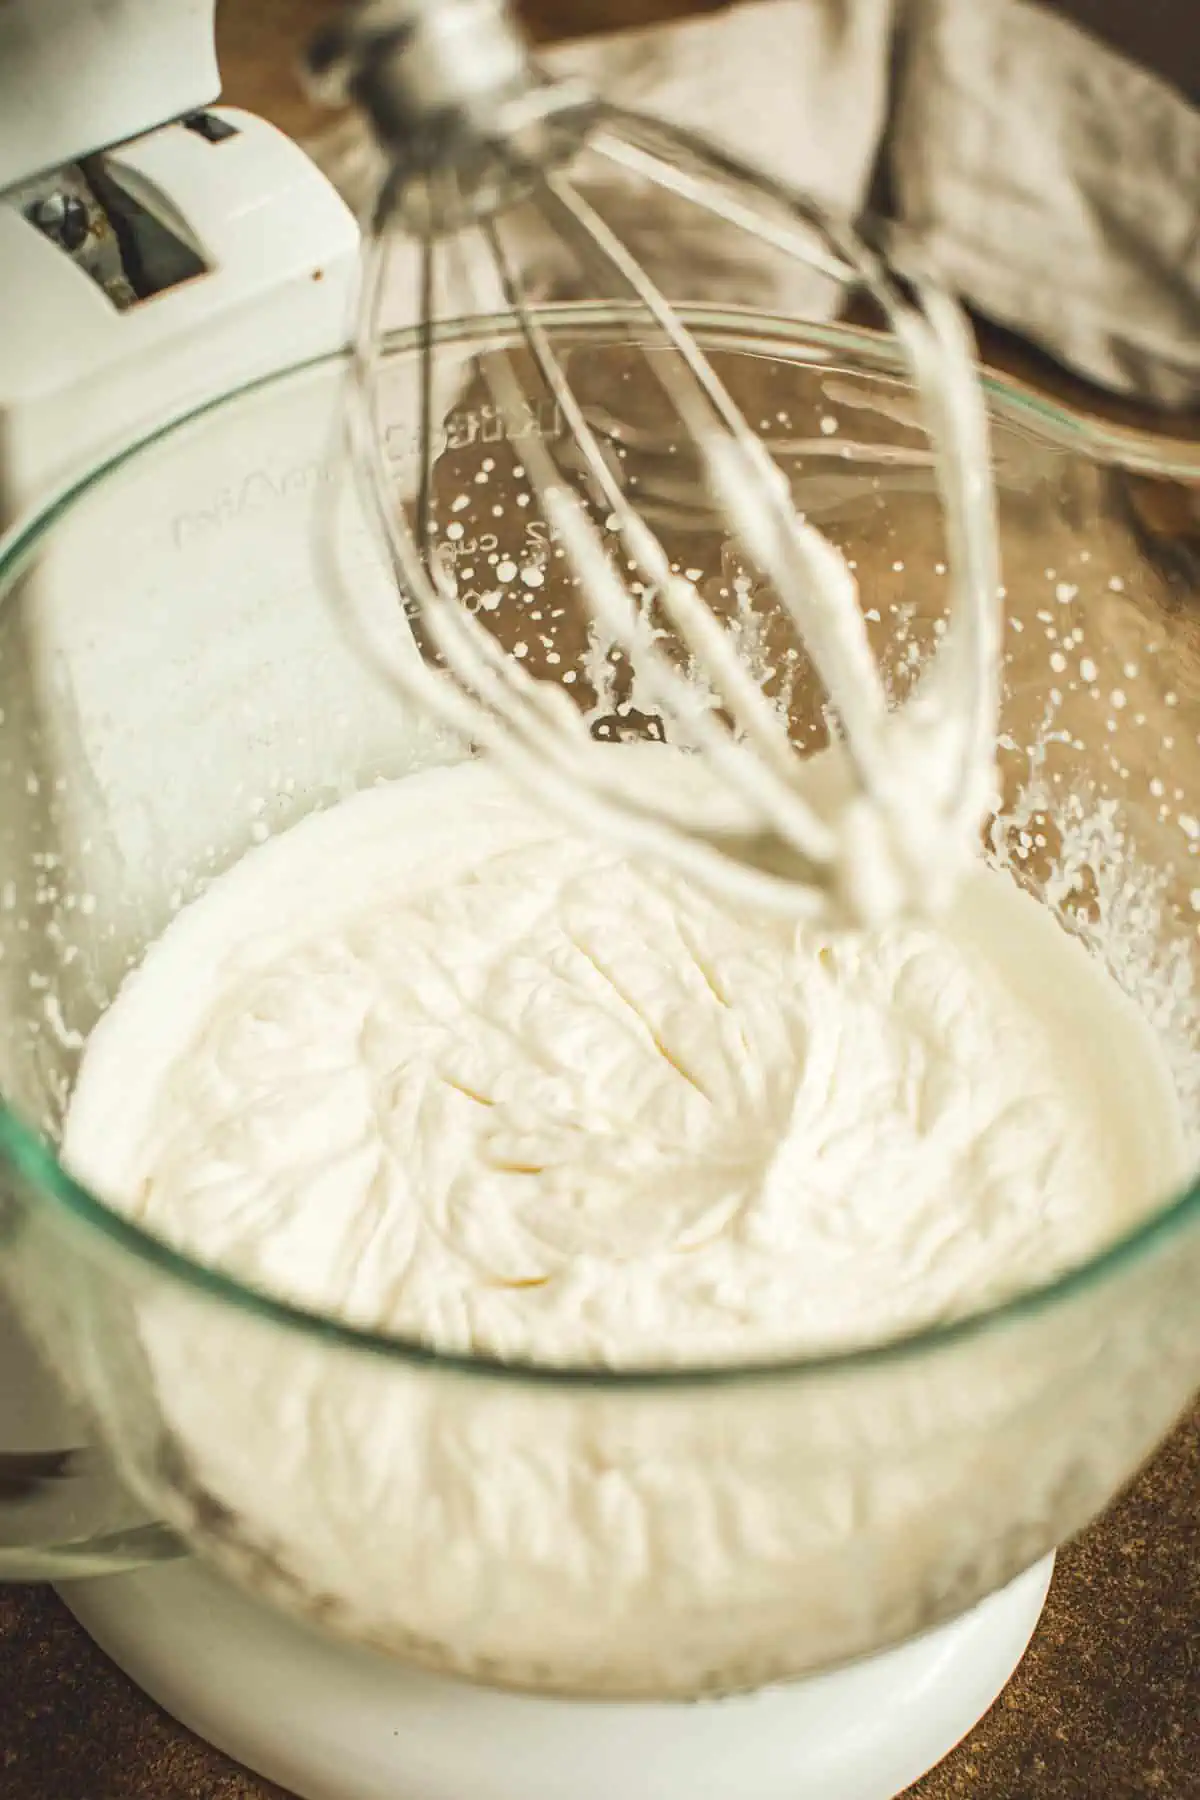 Bourbon whipped cream process step 2.